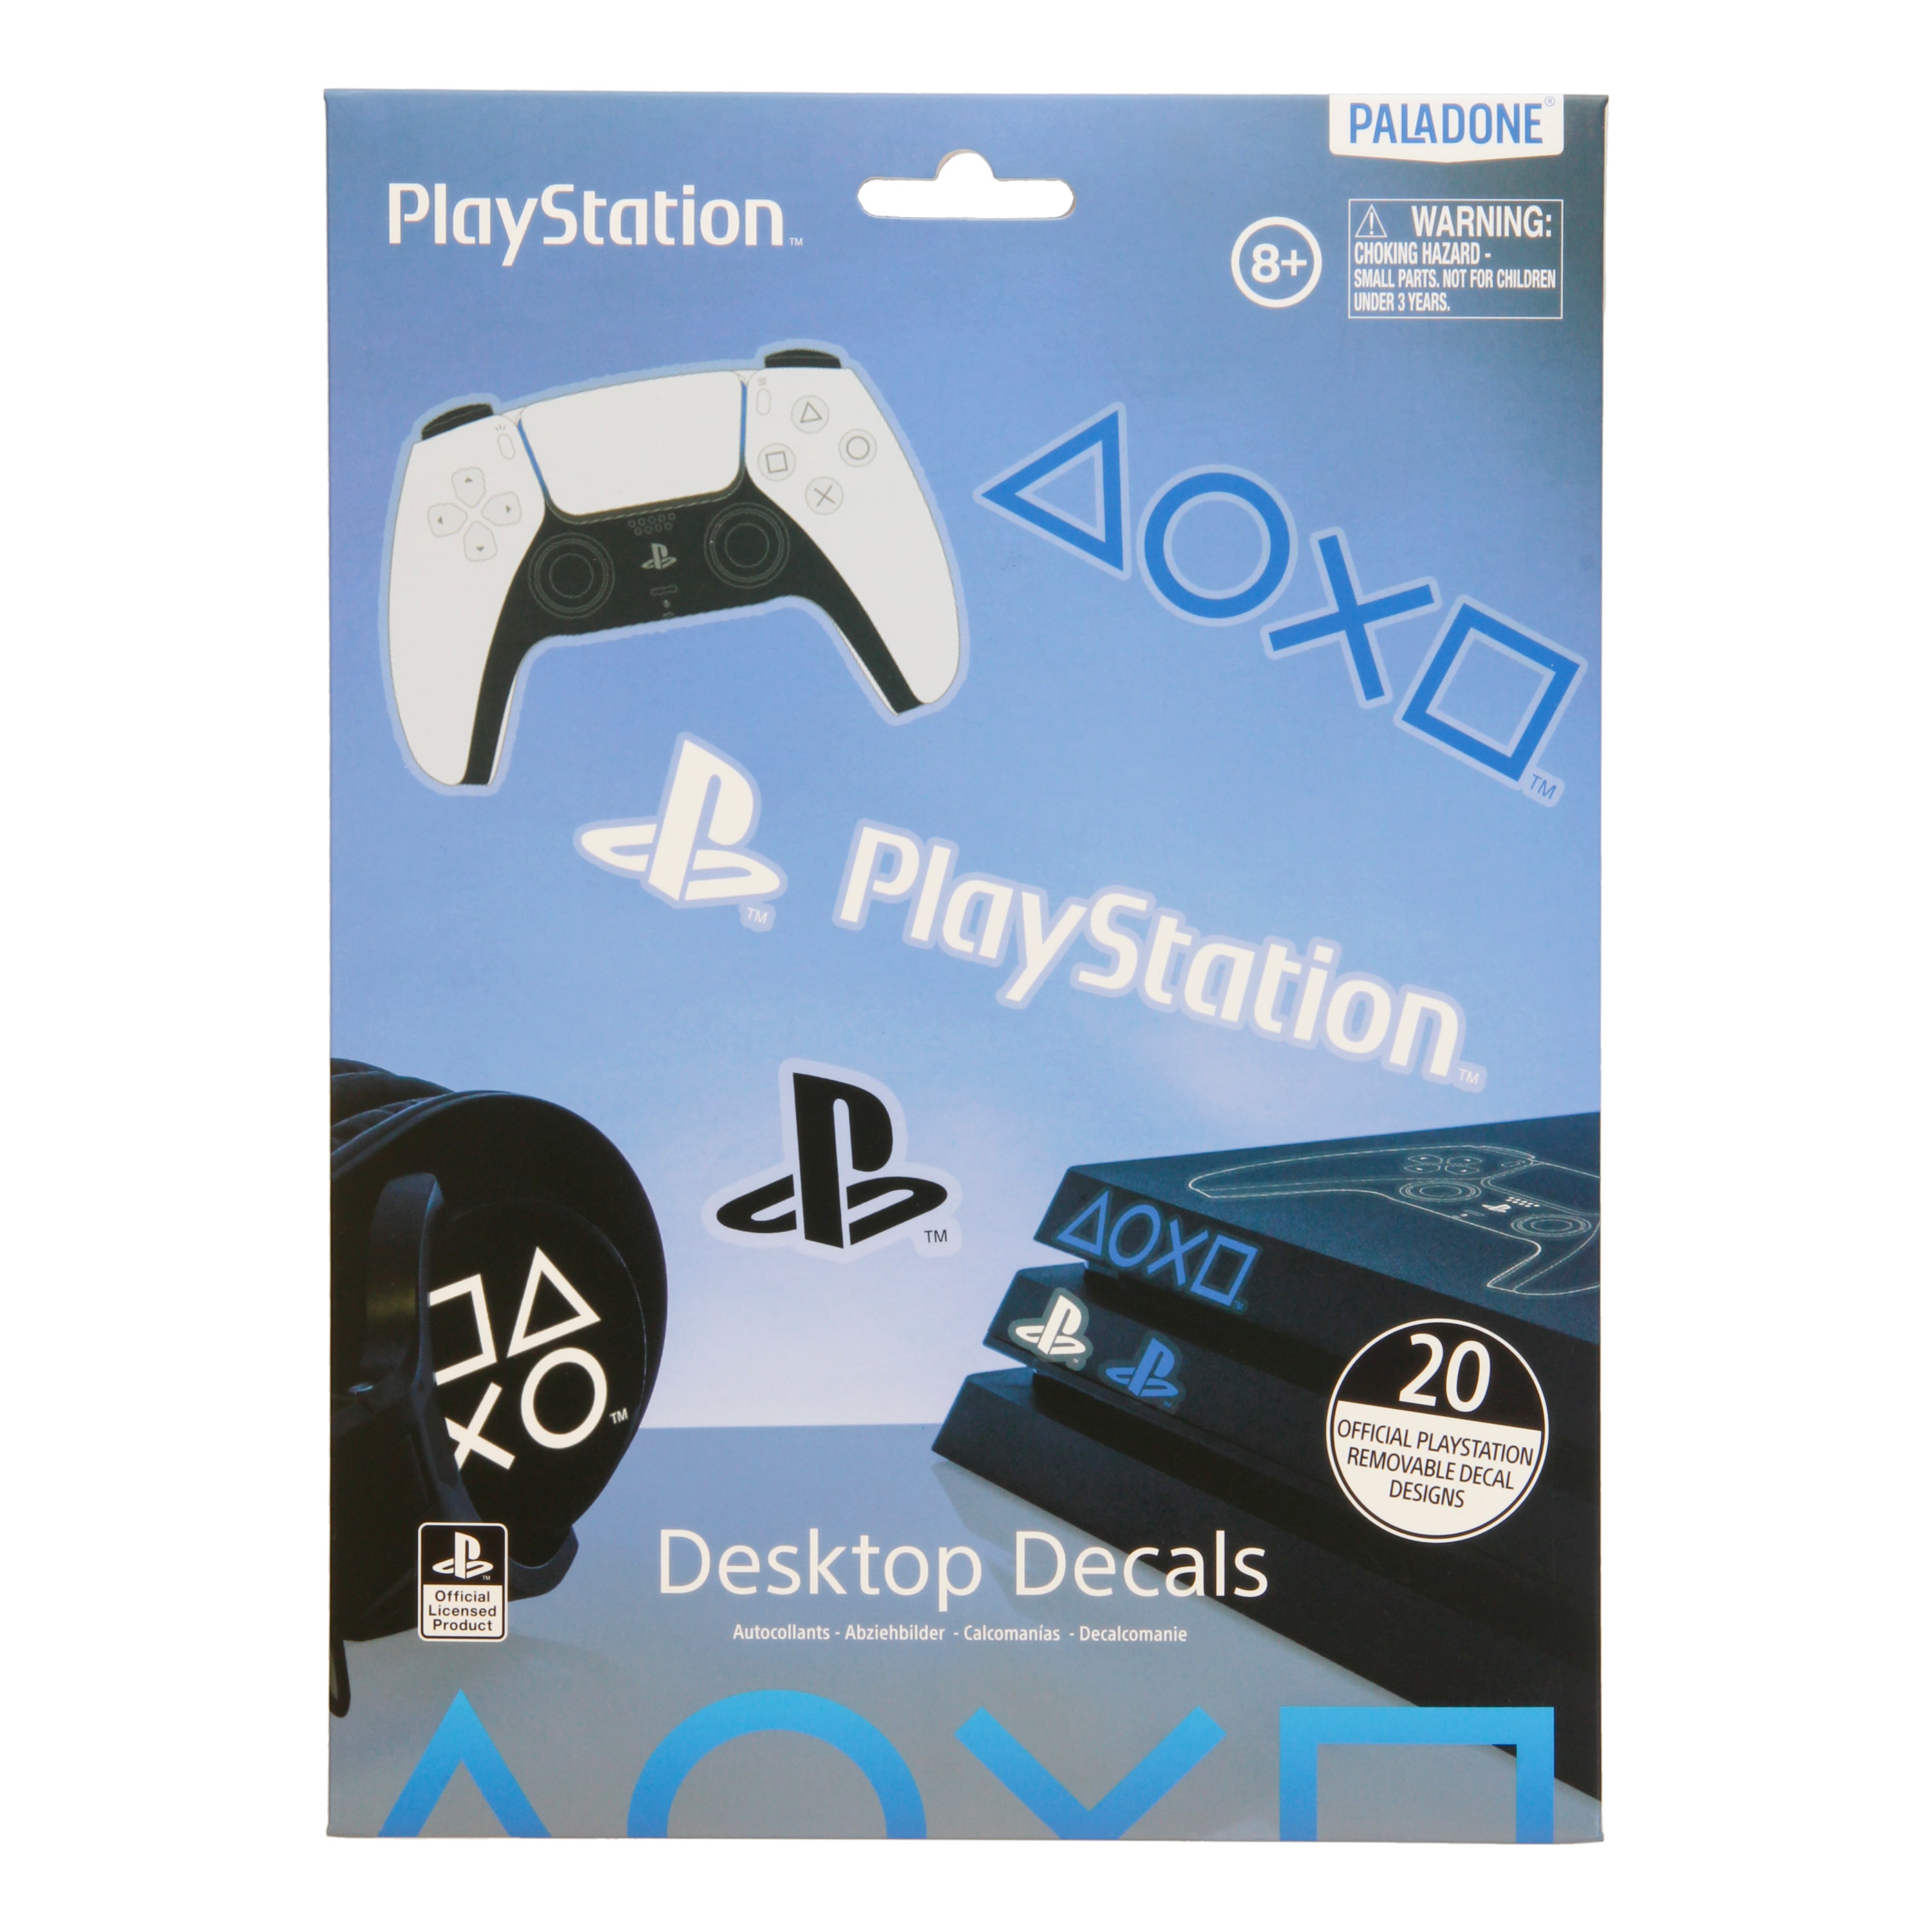 PlayStation Desktop Decals